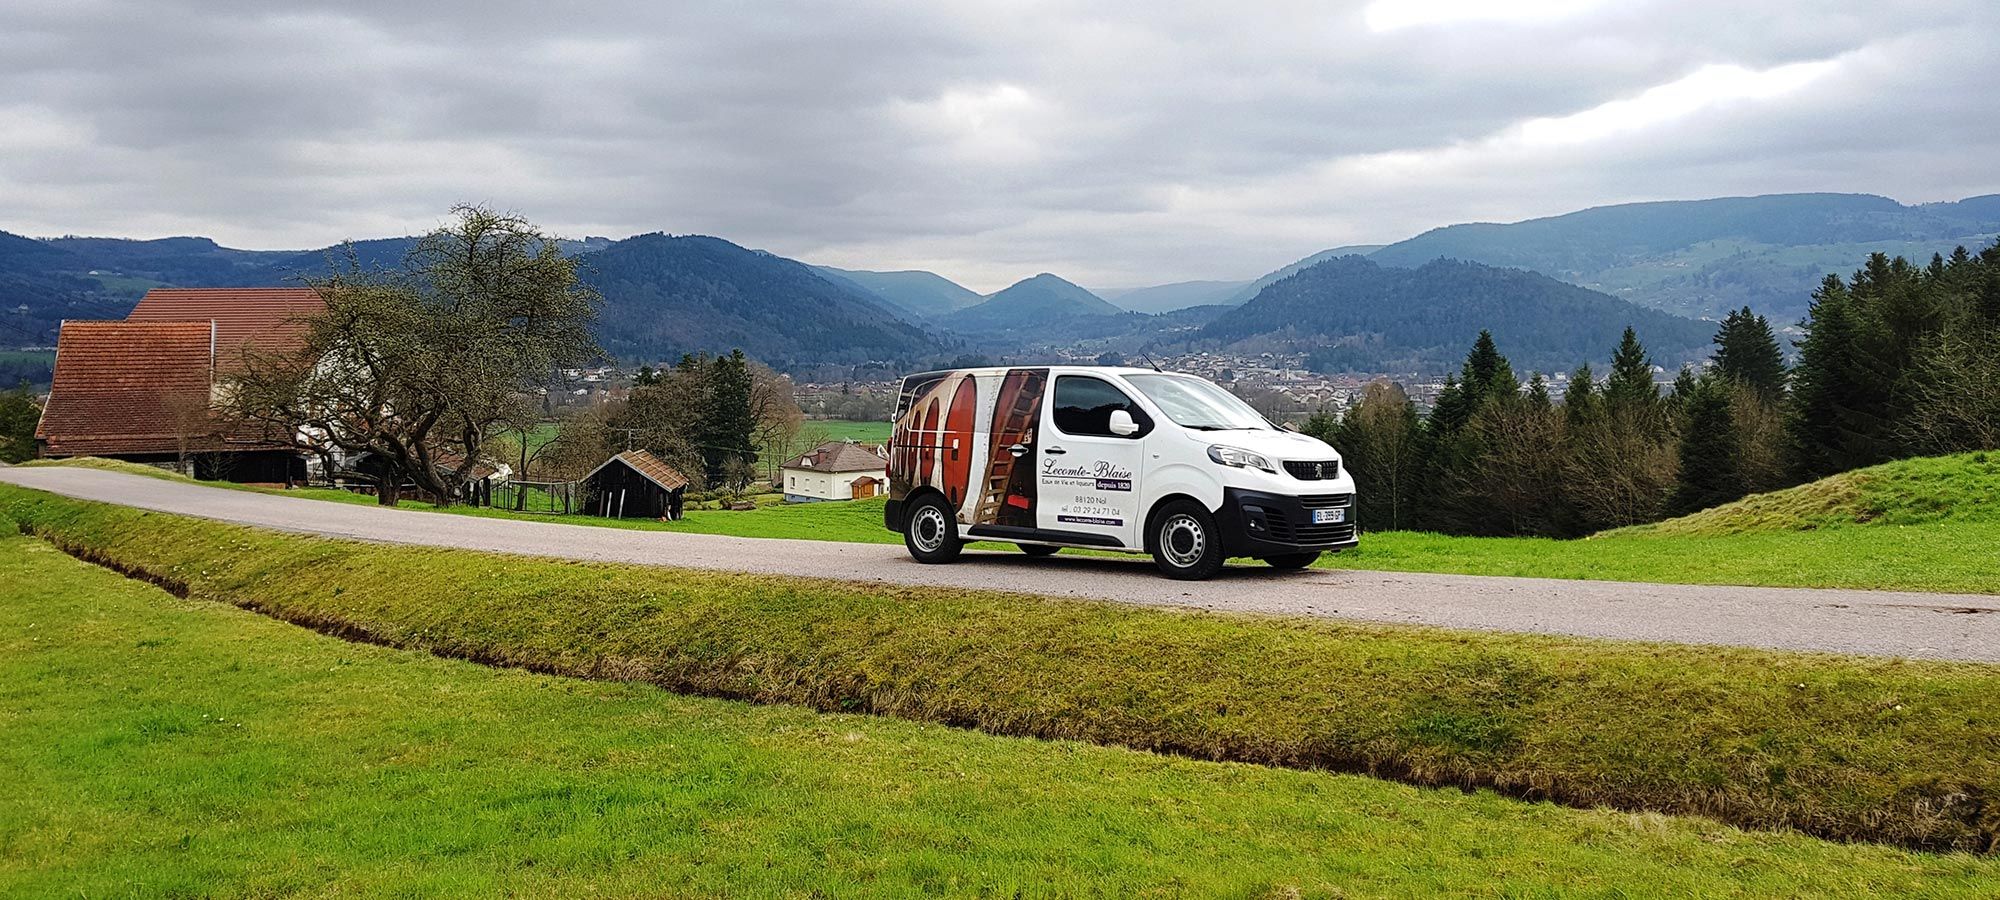 Landscape Vosges mountain fir prairie van delivery